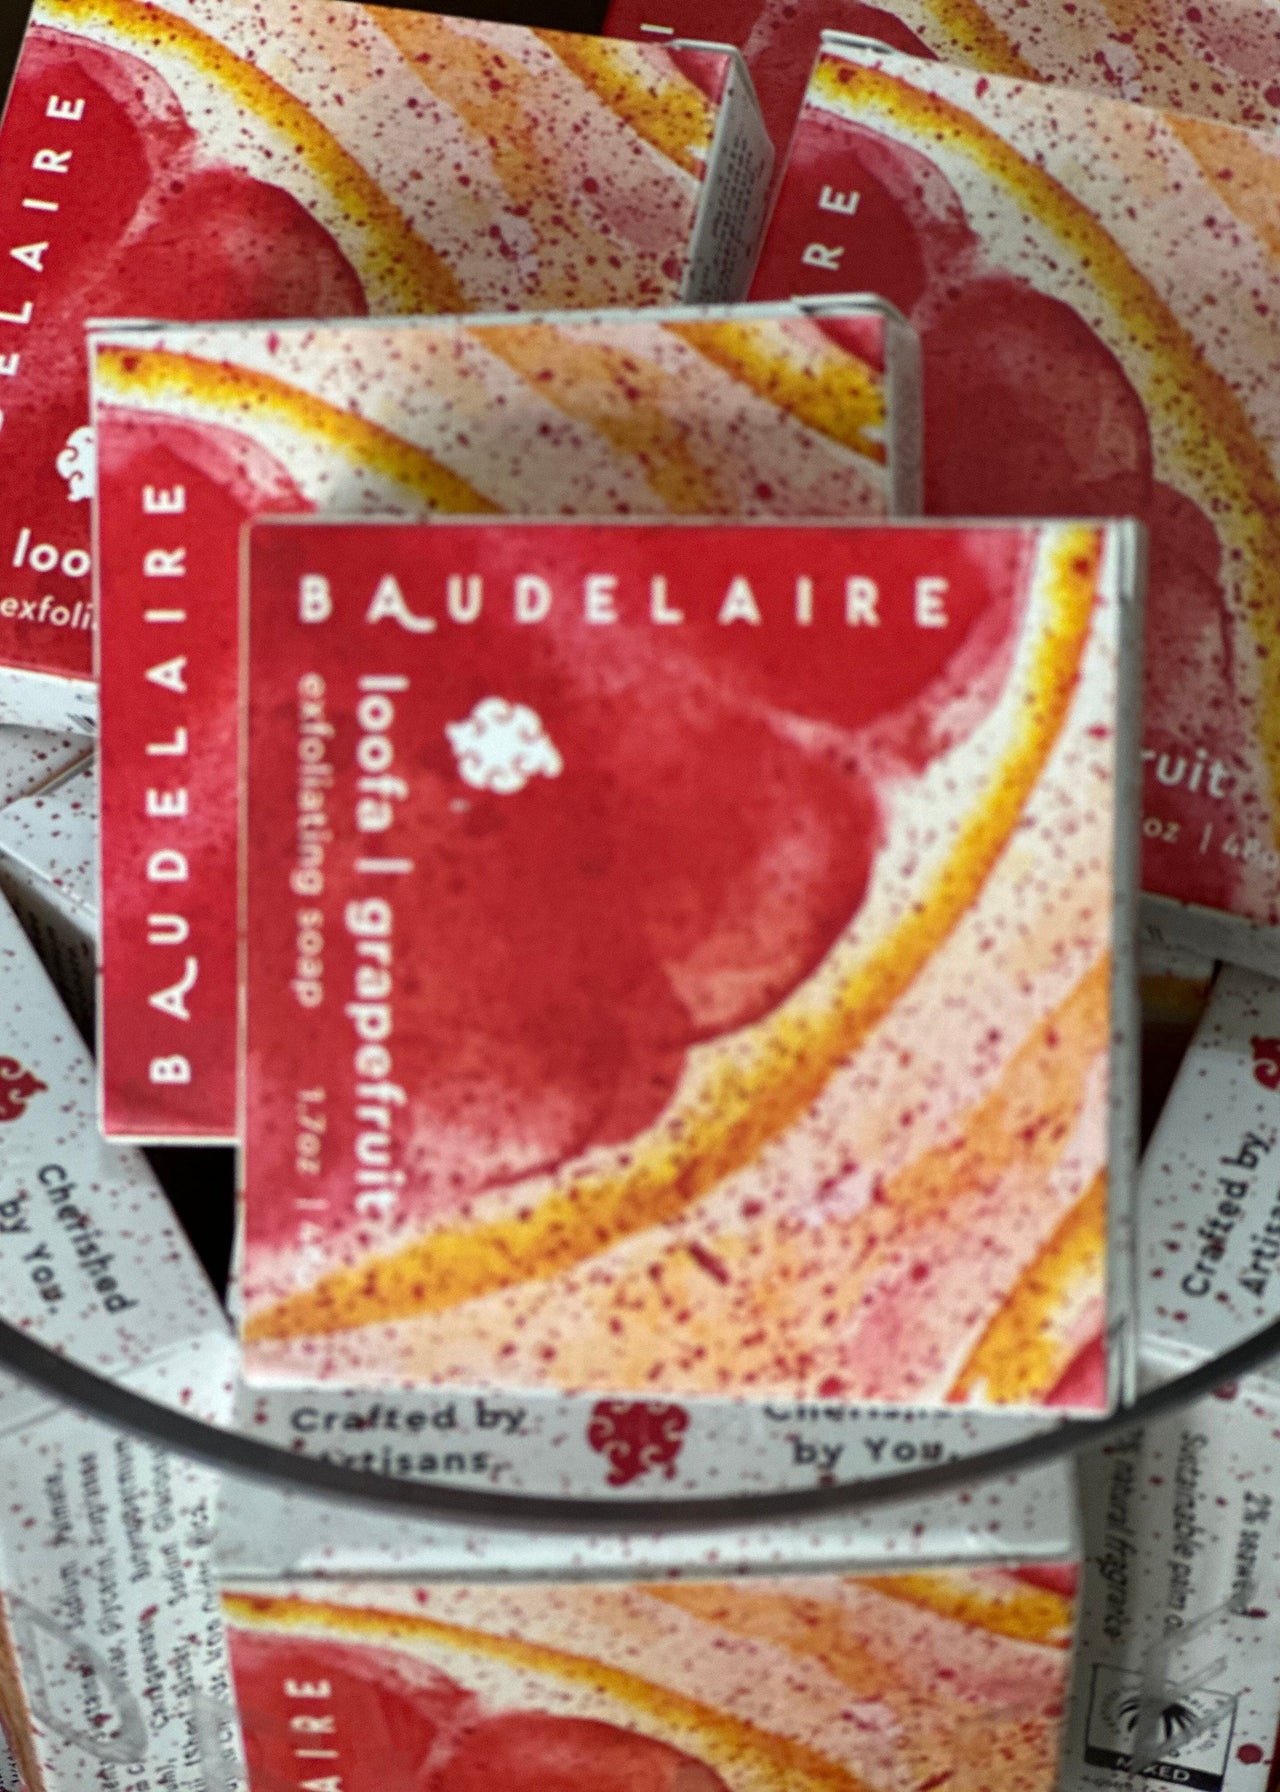 Grapefruit Loofa 1.7oz Baudelaire